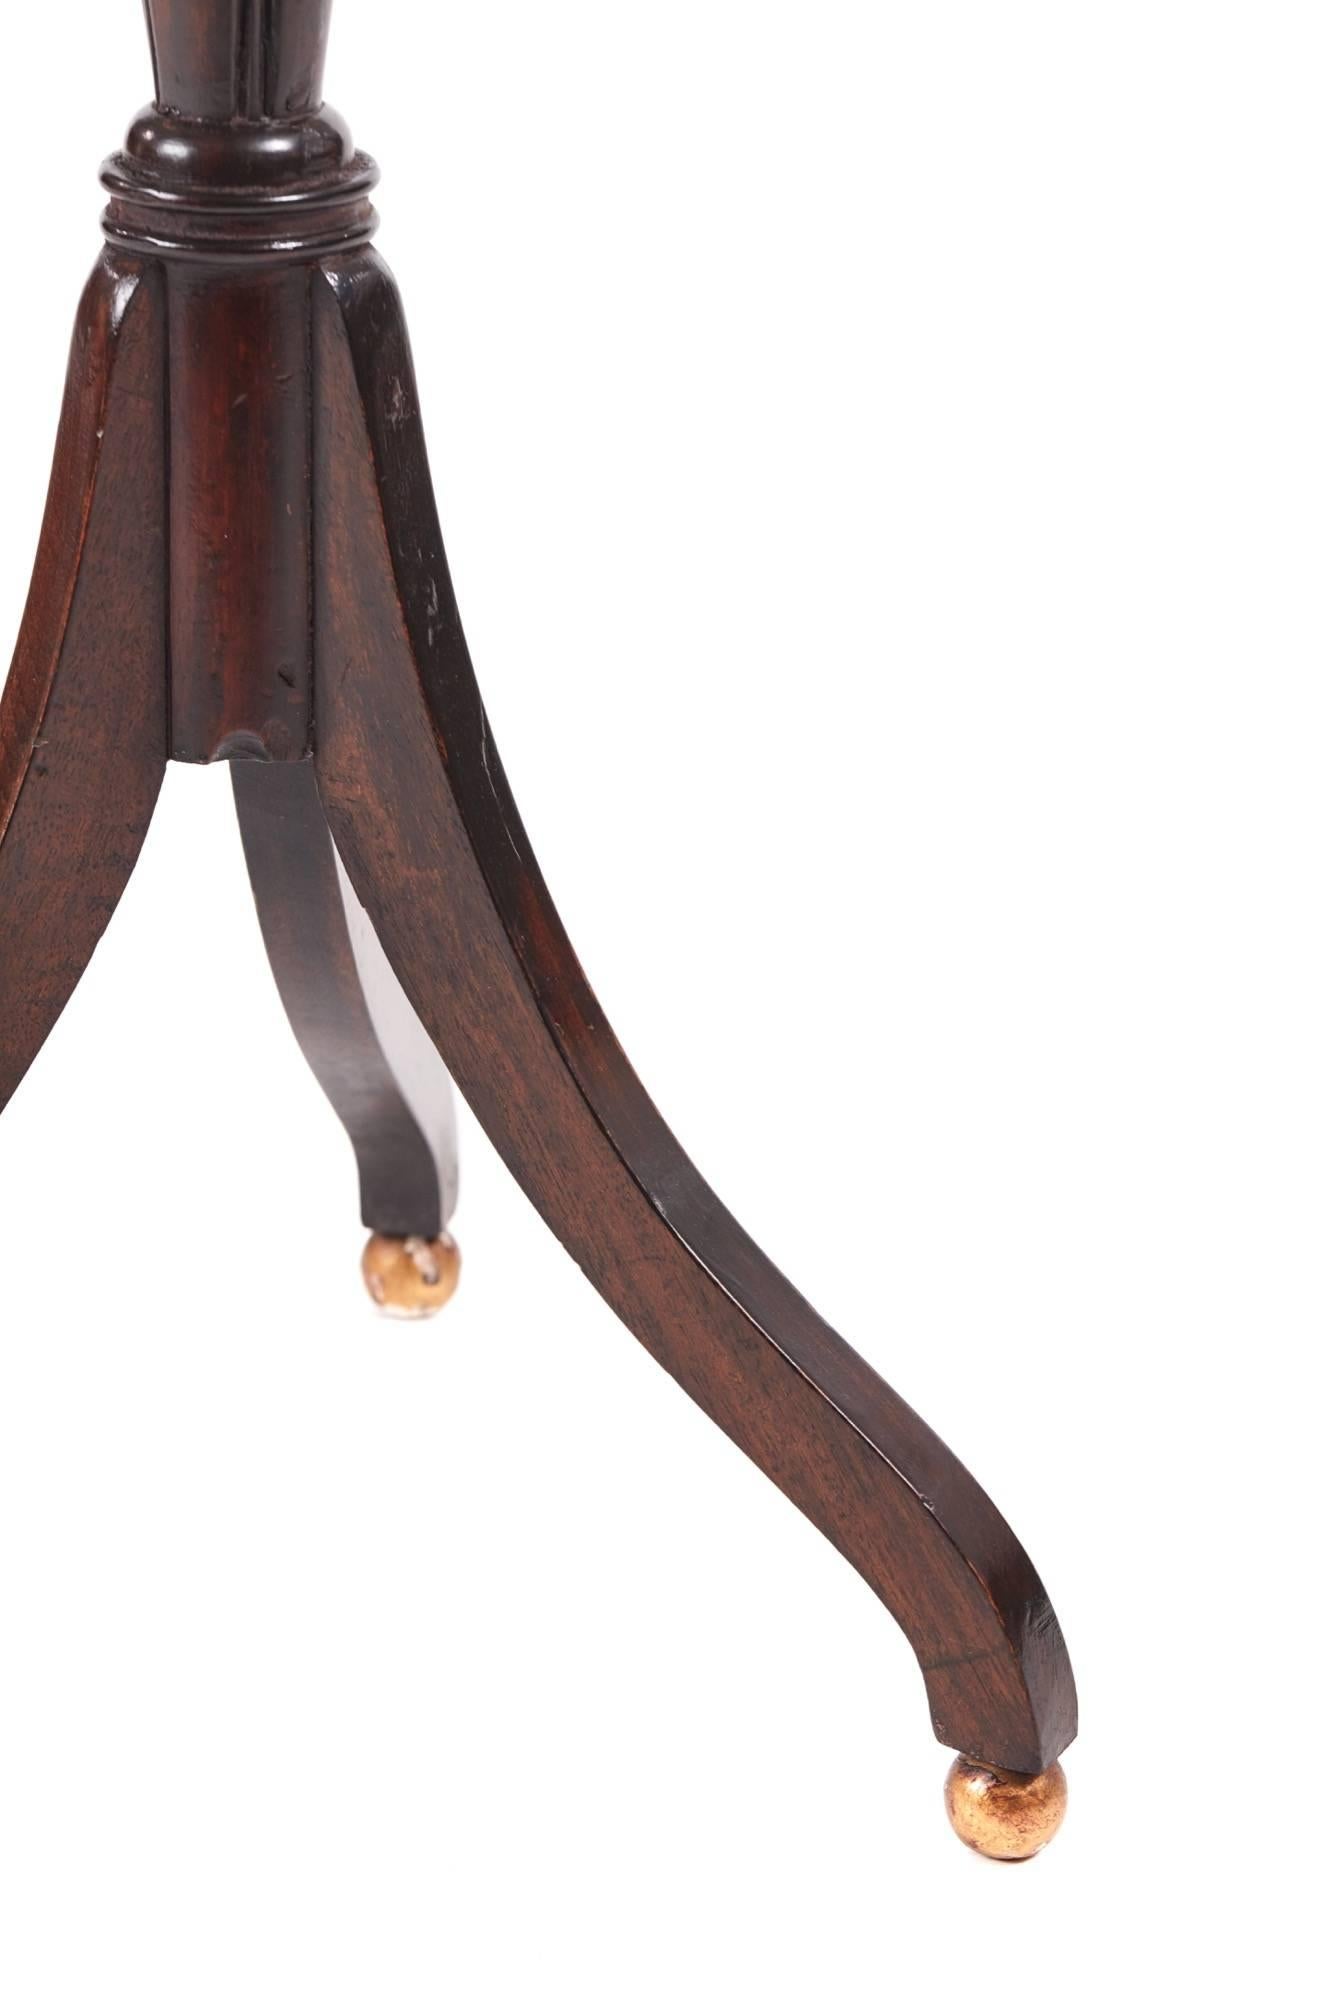 Hardwood Unusual Victorian Inlaid Candlestand